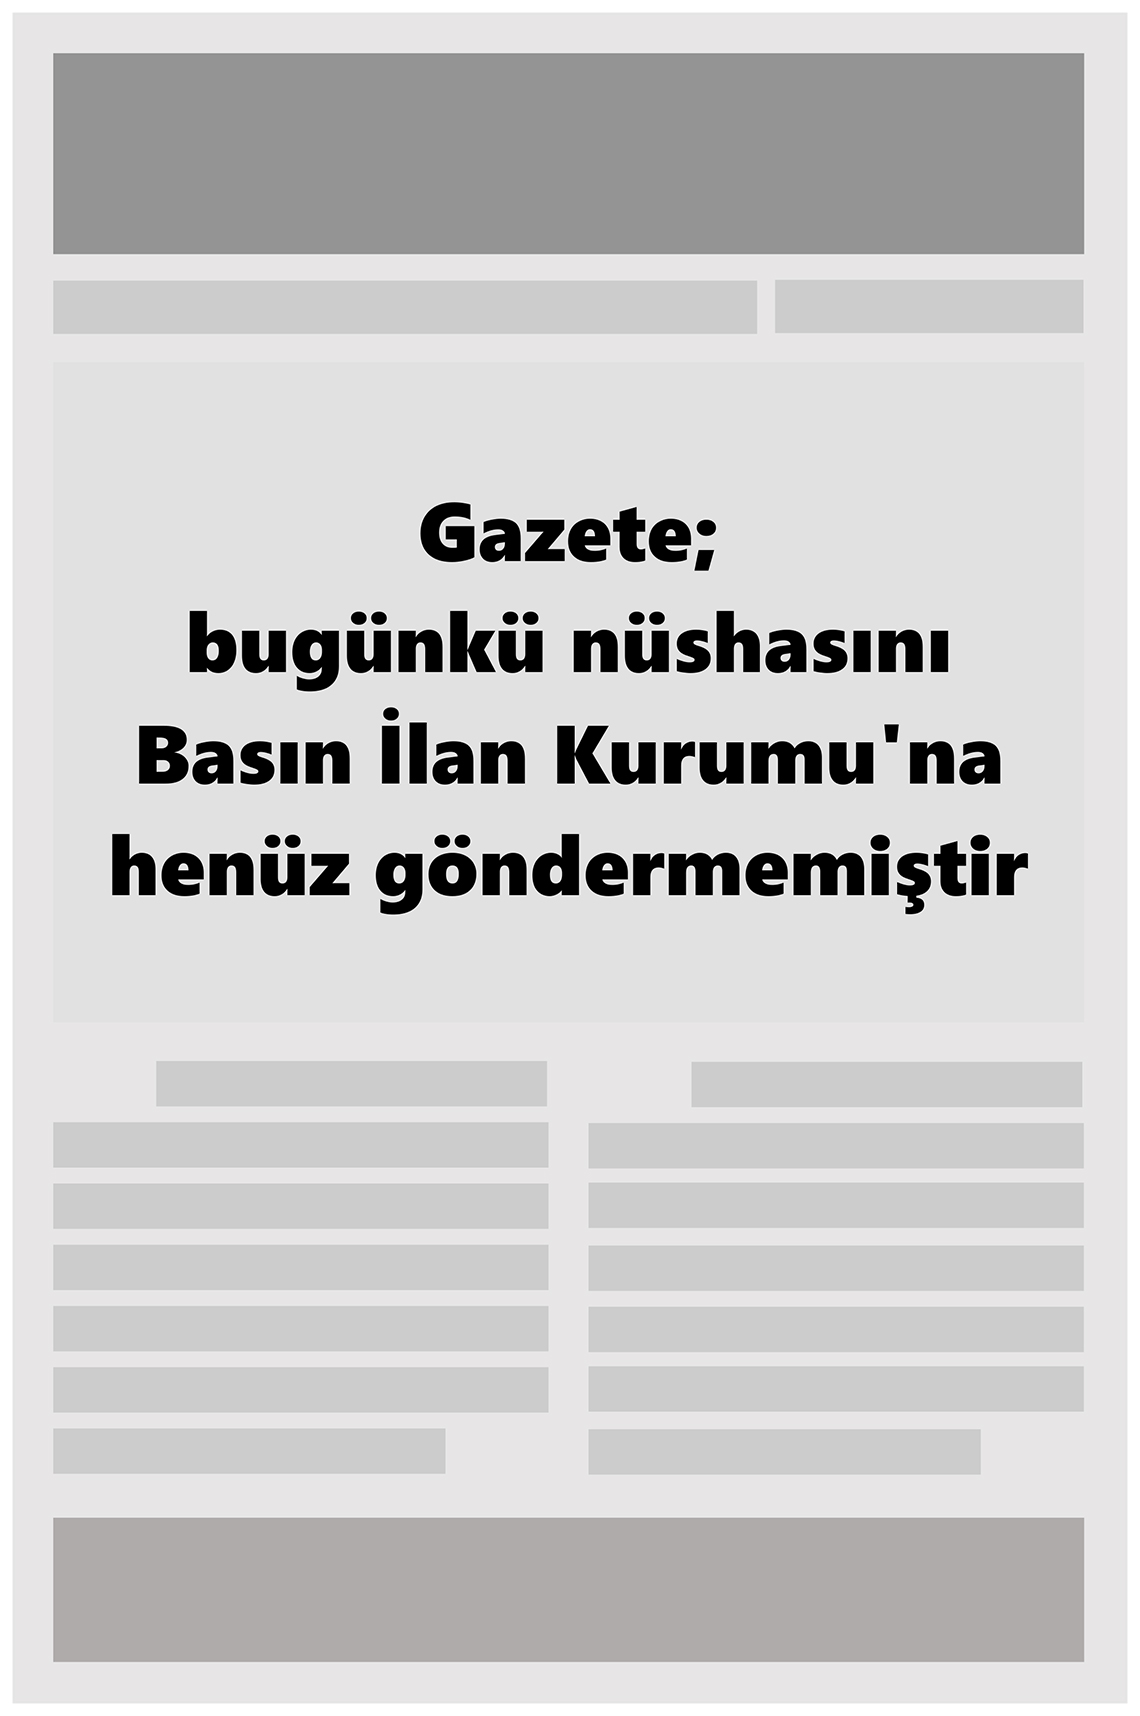 25 Eylül 2022 Balıkesir Politika Gazete Manşeti